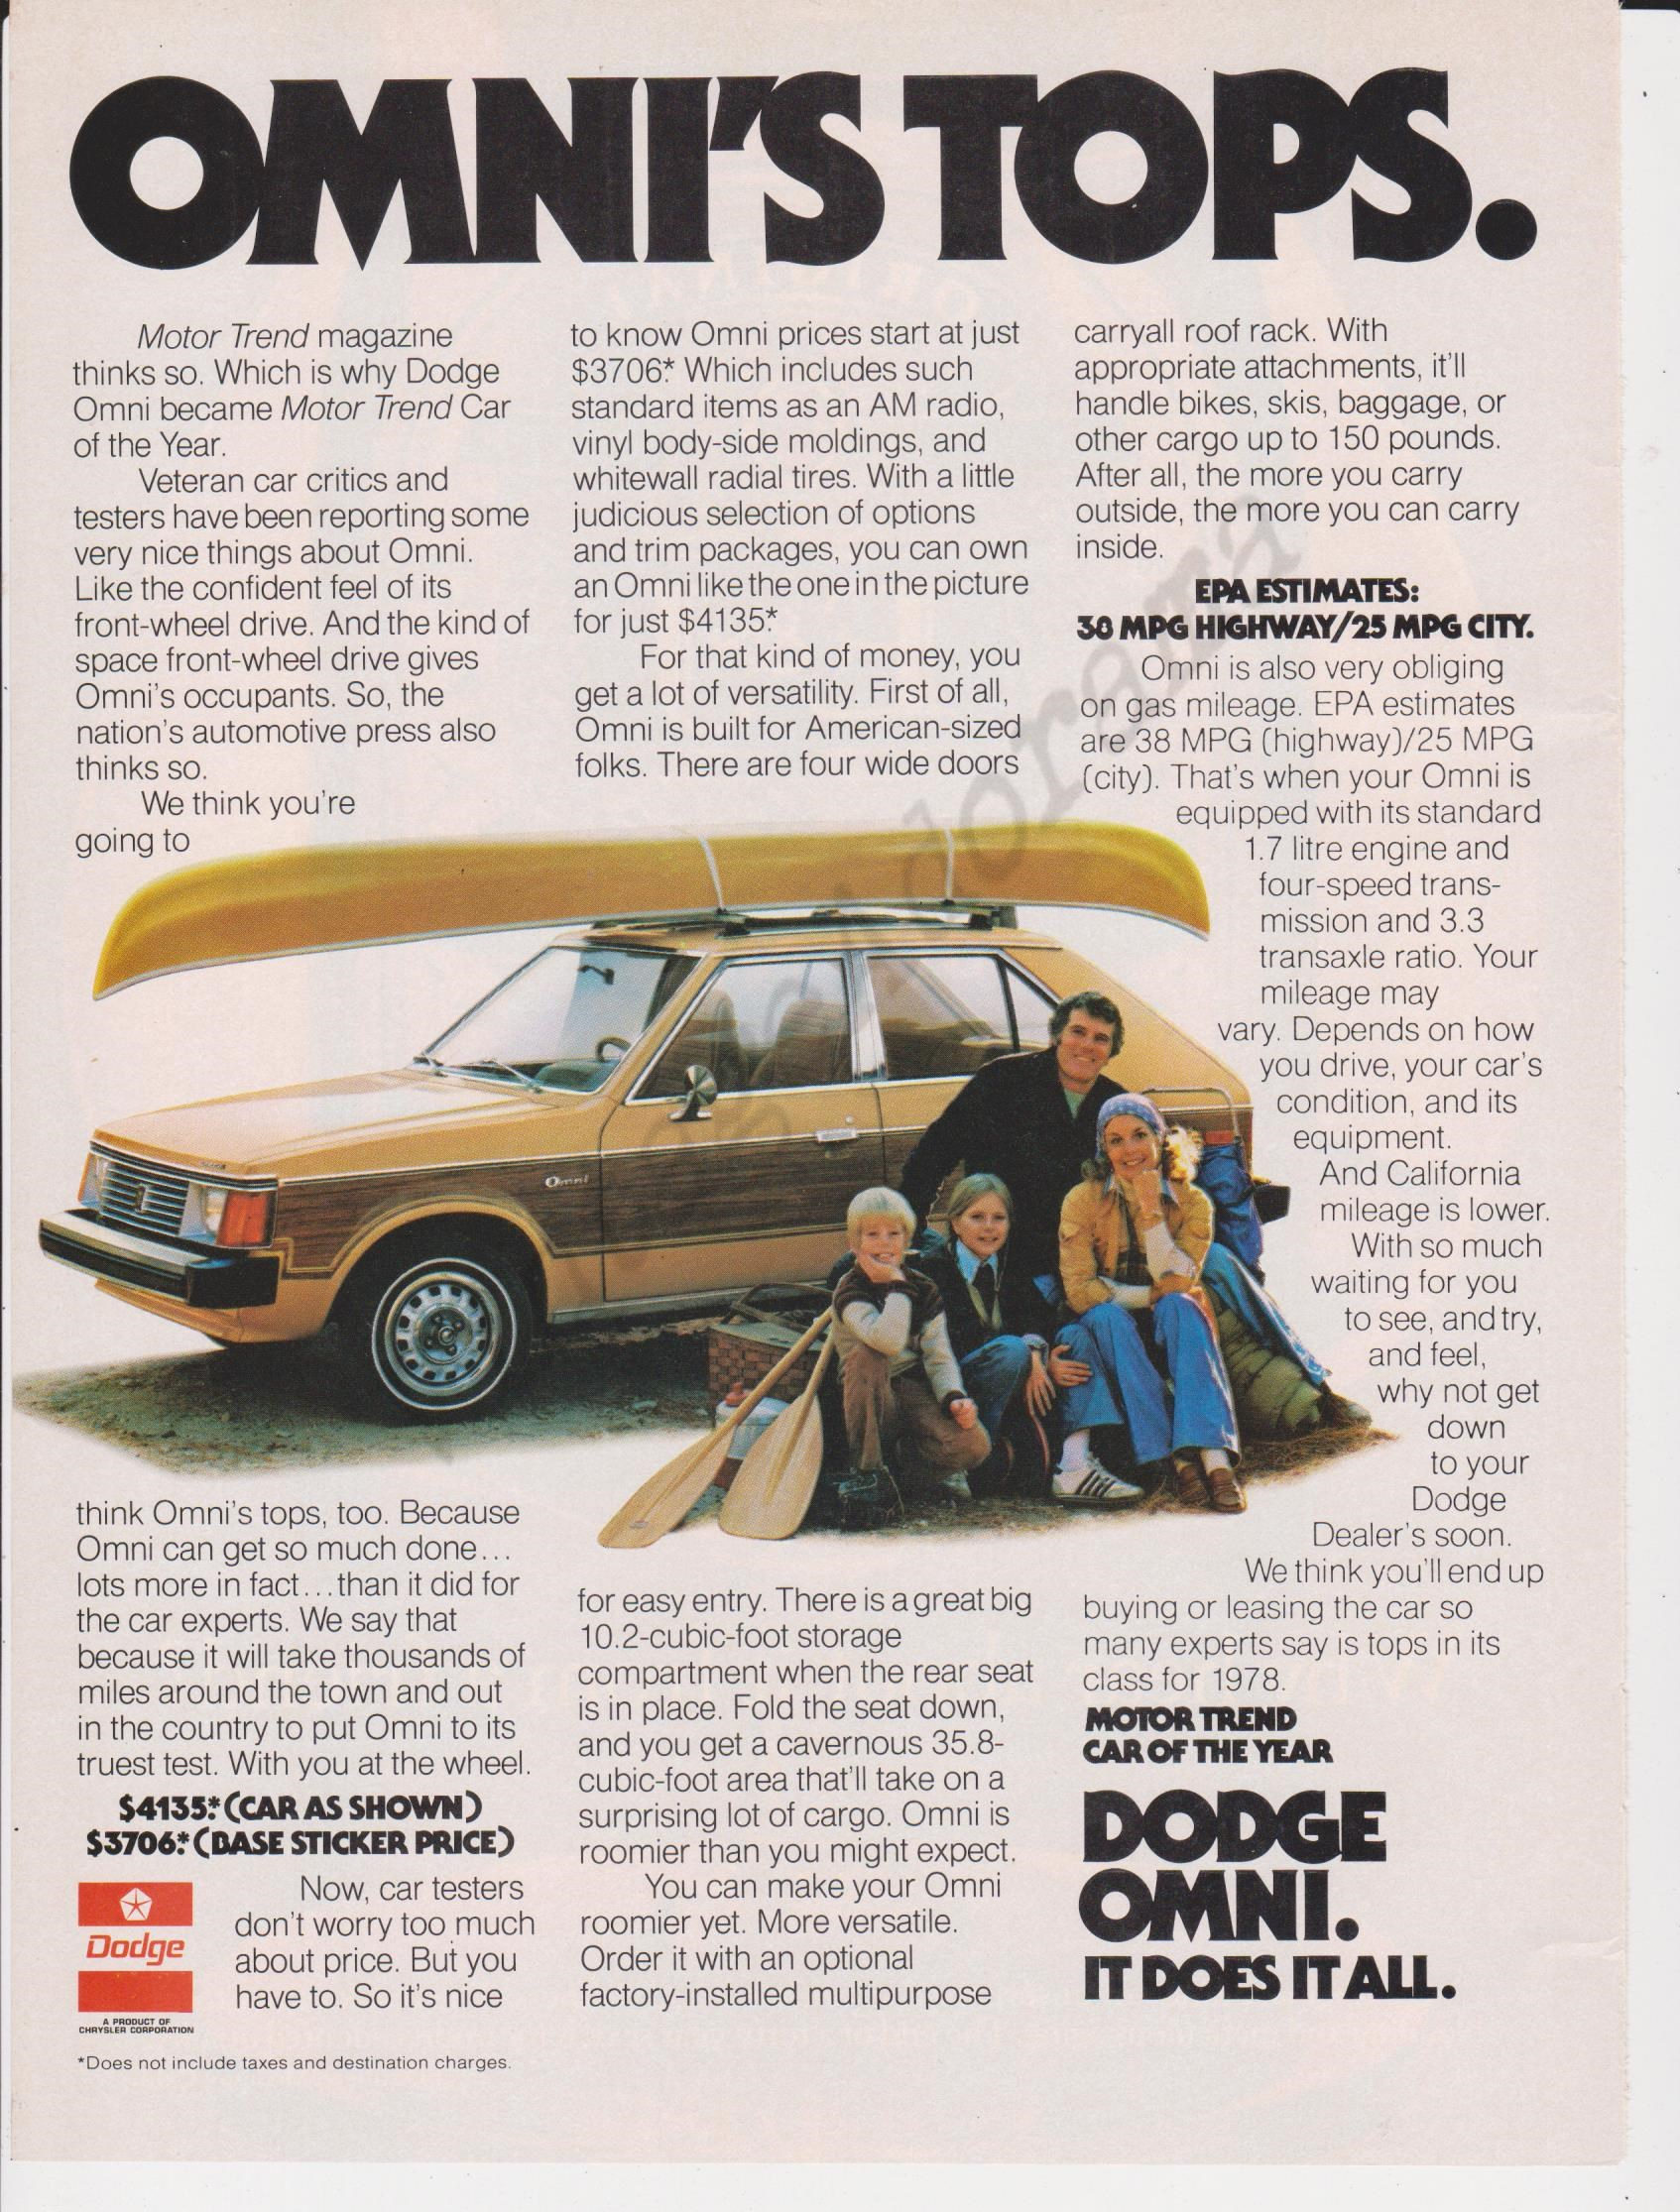 DODGE OMNI Automobile Original 1978 Vintage Color Print | Etsy